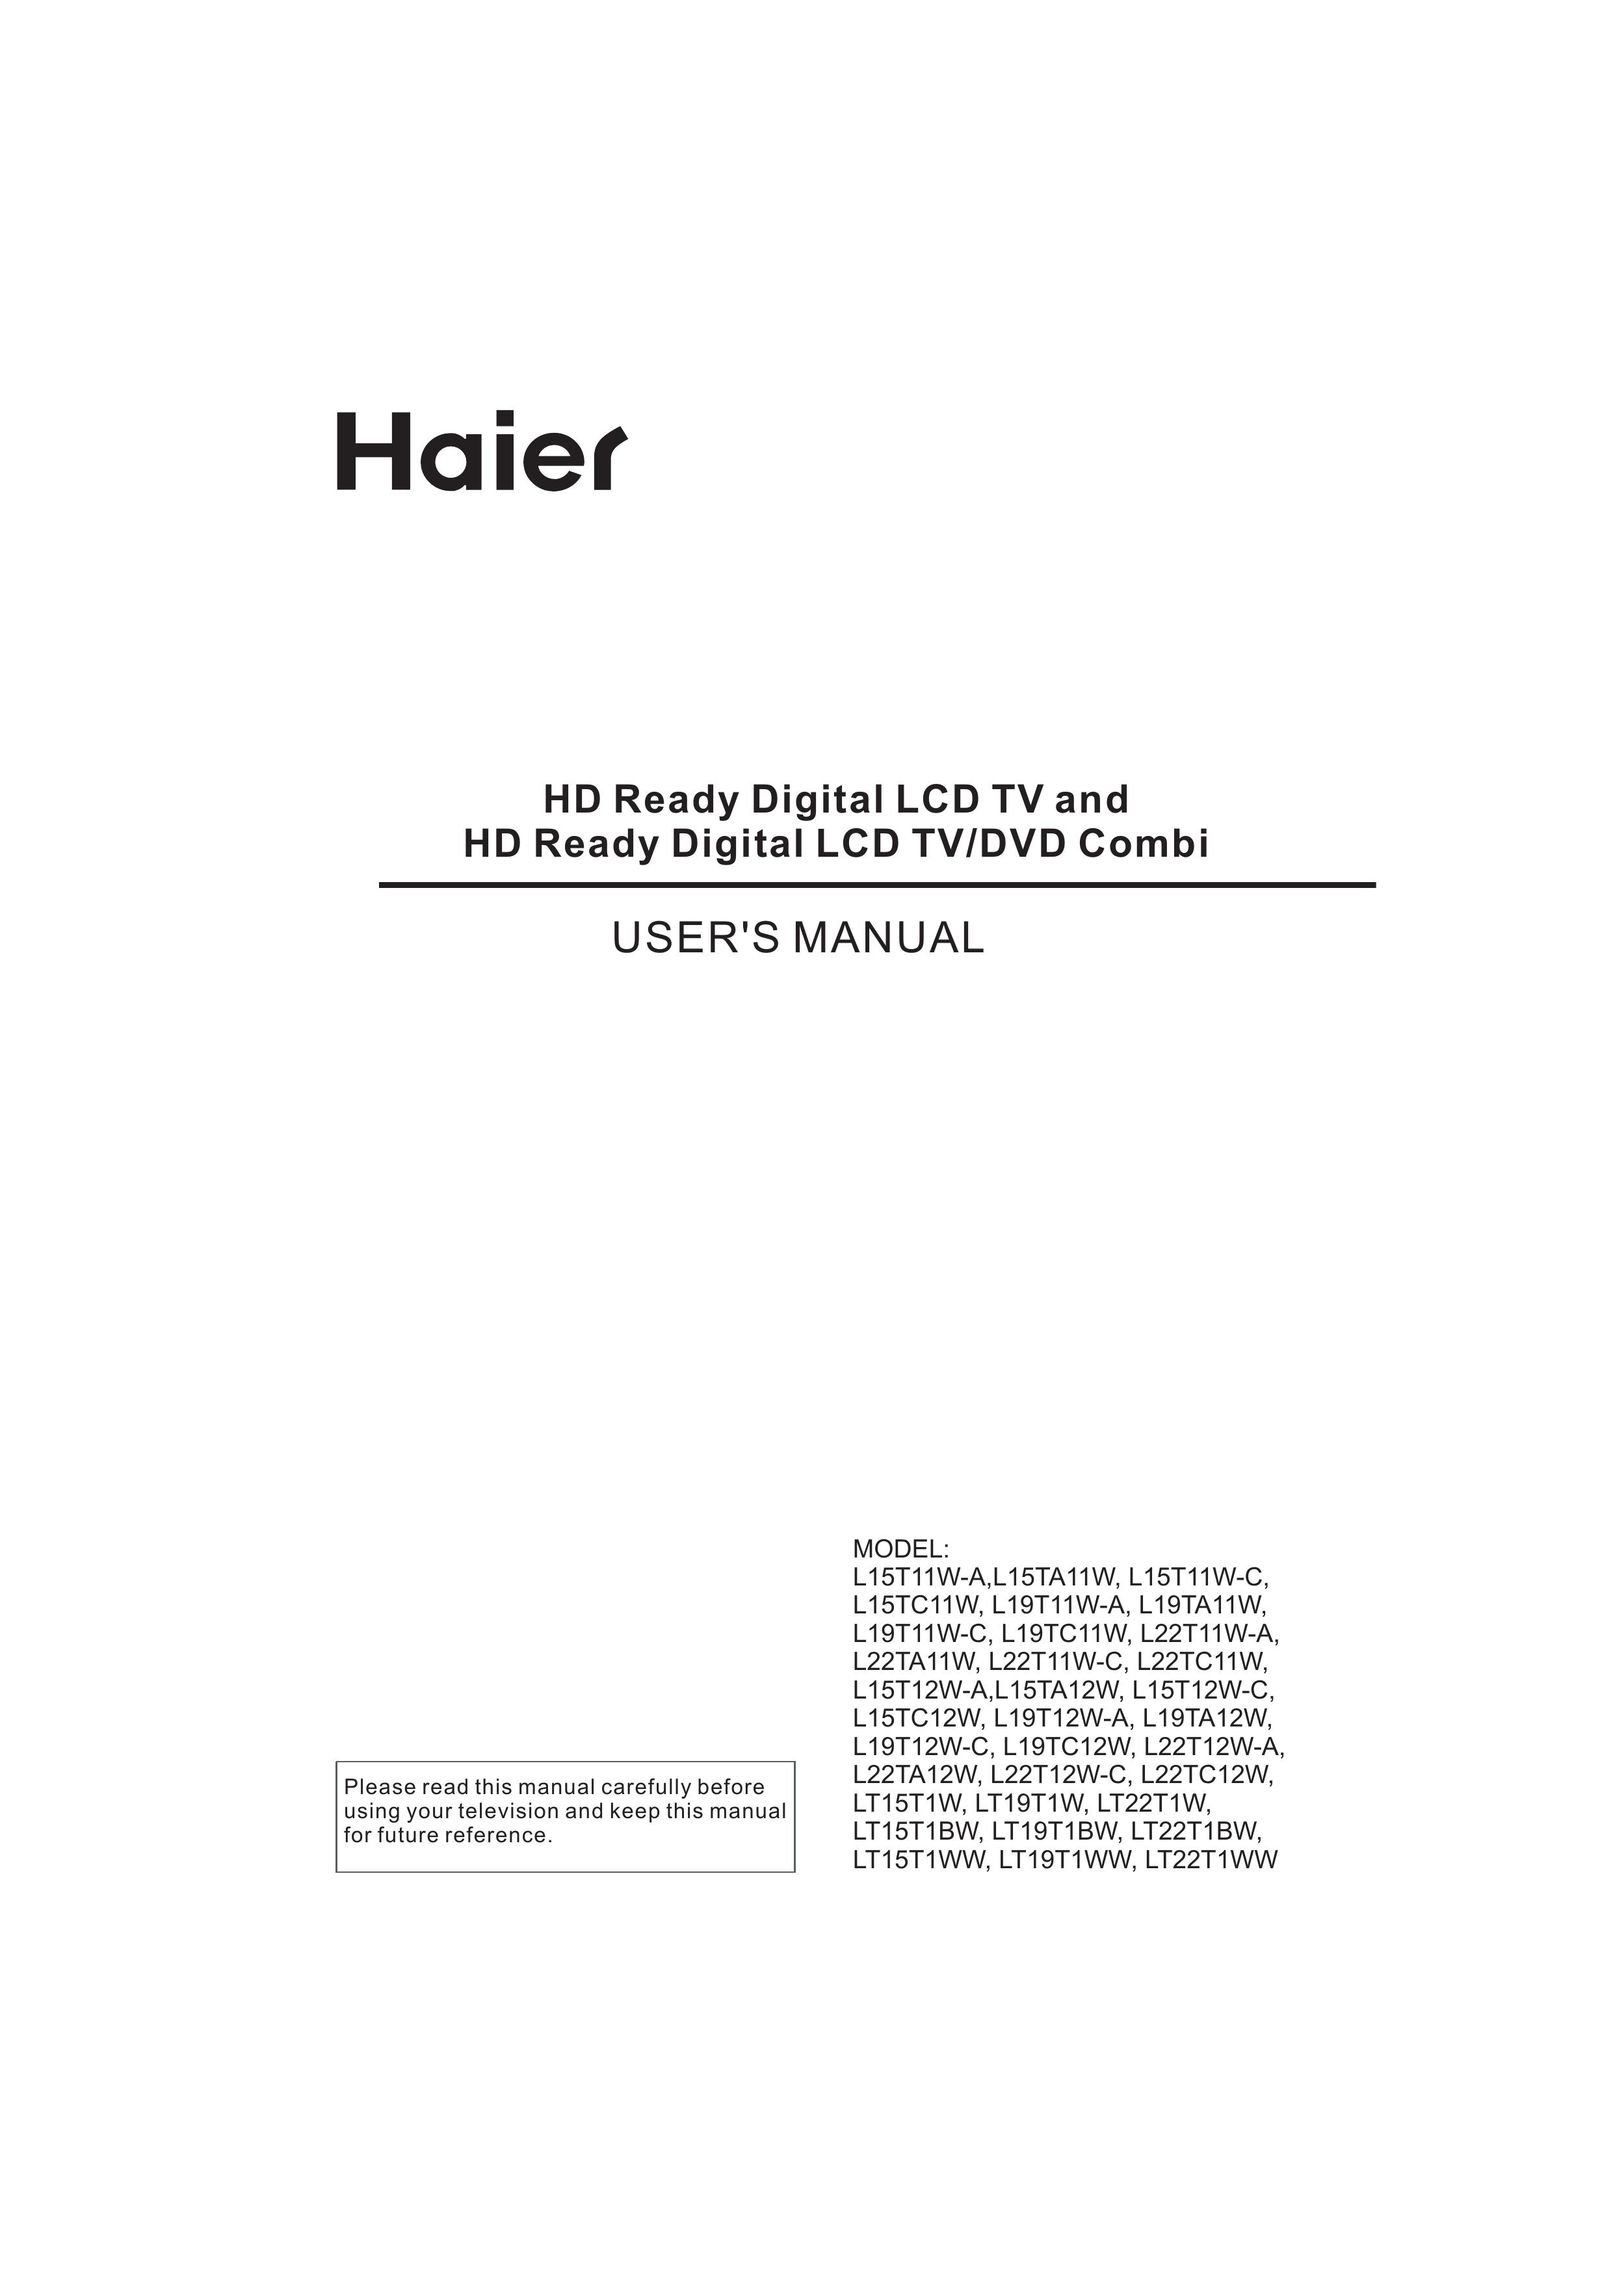 Haier L19T11W-A TV DVD Combo User Manual